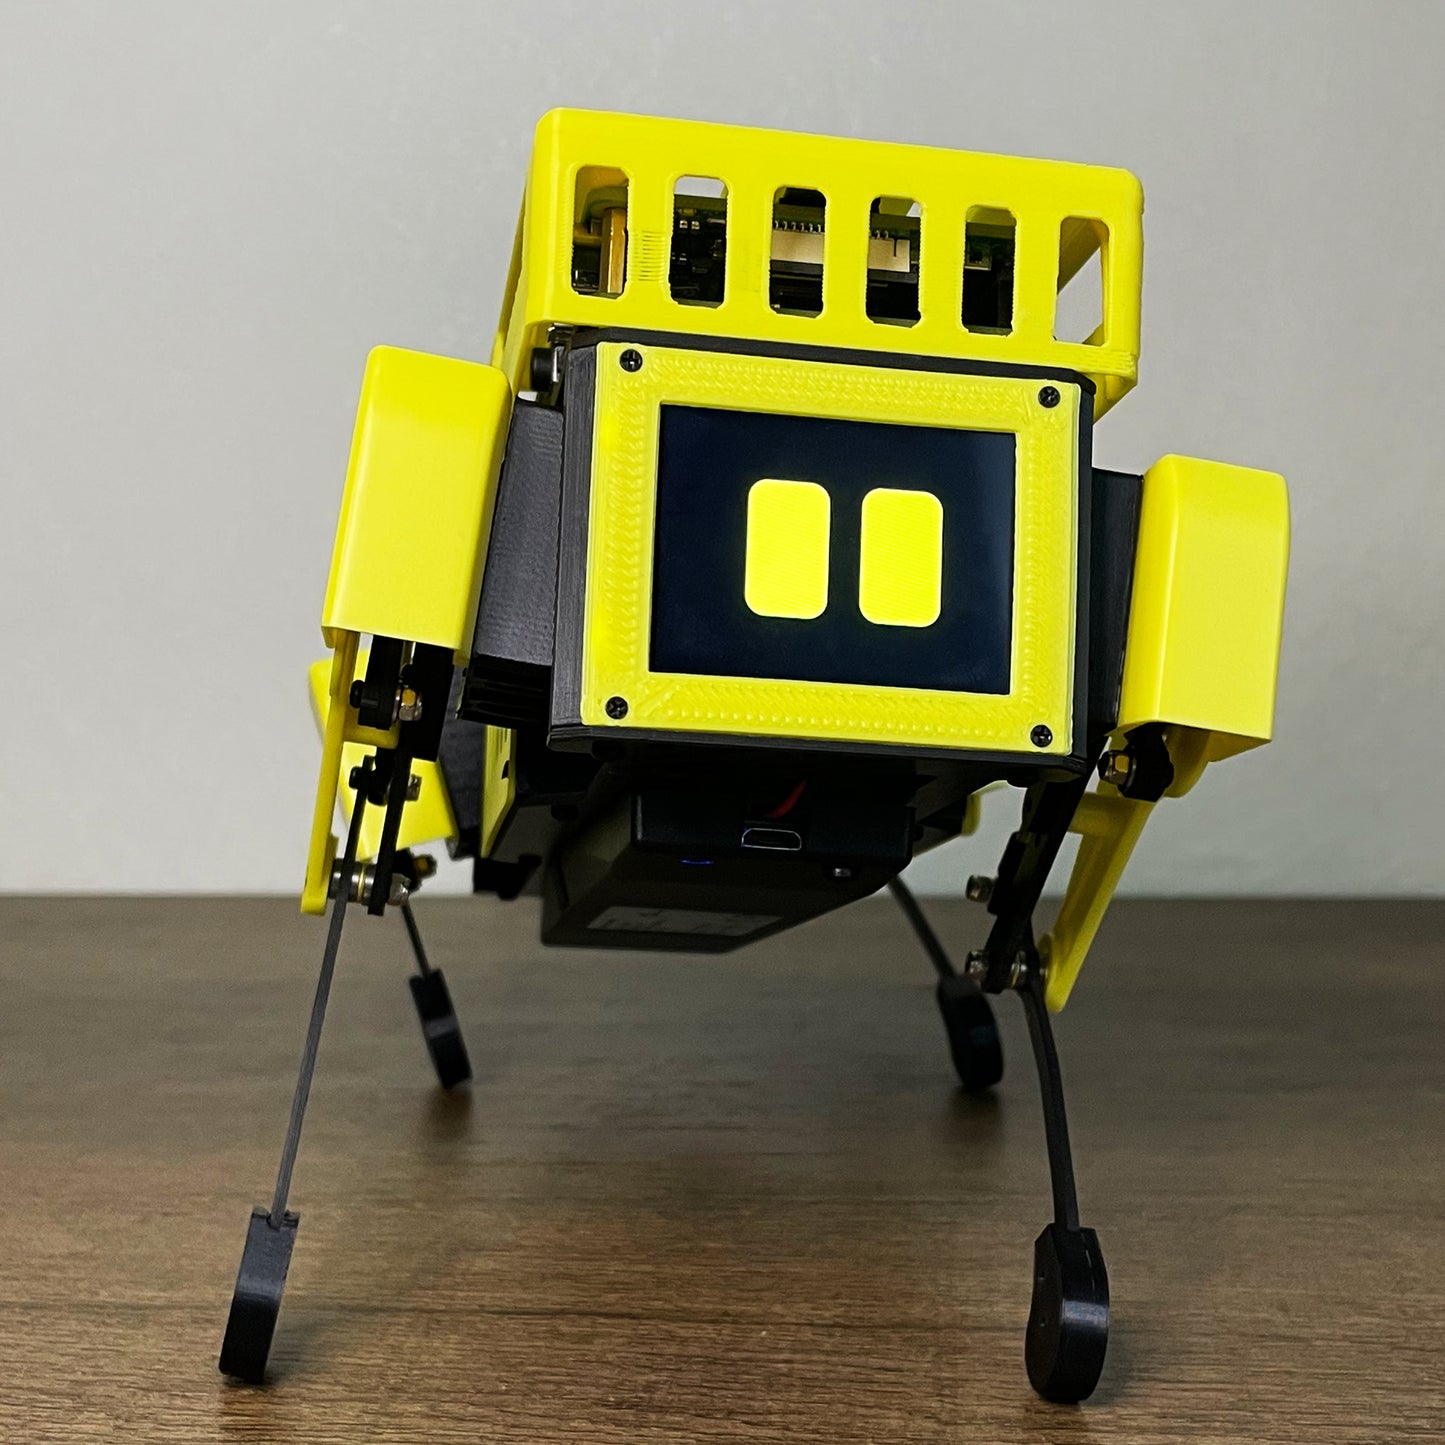 MangDang Mini Pupper: AI Robot, Smart Robot, Quadruped Robot, Educational Robot, Genuine, Open-Source, STEM, K12